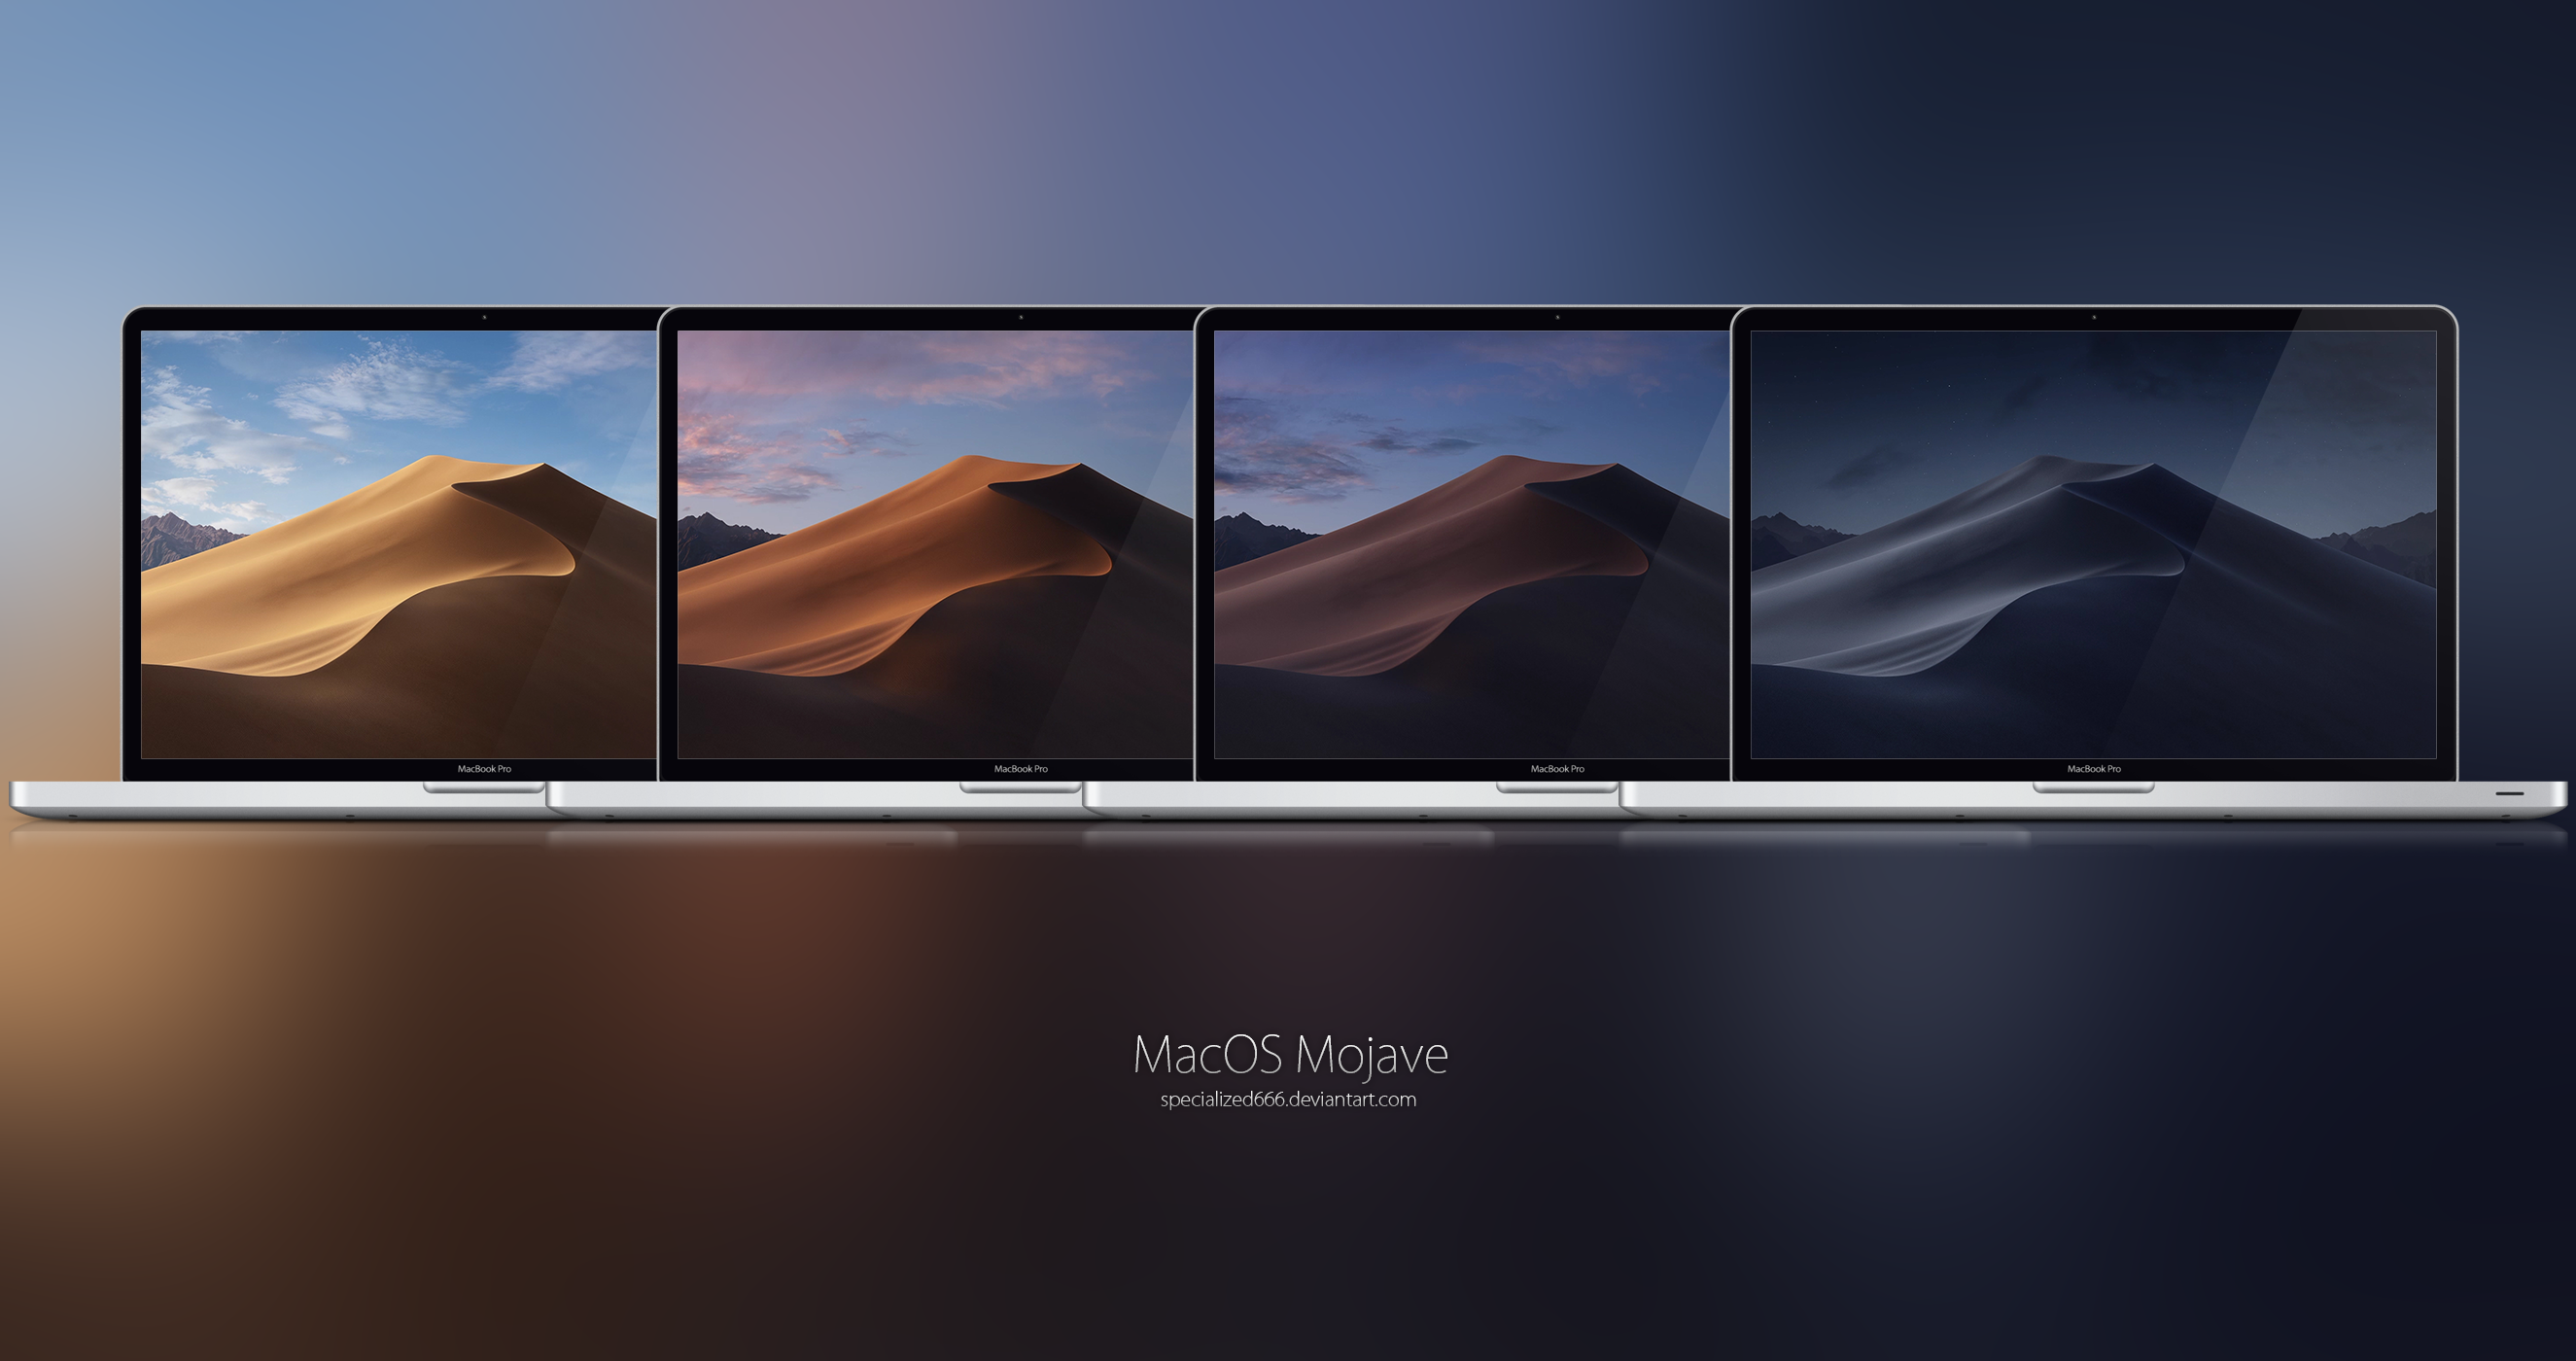 1080x1920 macos mojave, macbook pro, apple, computer, original, hd, night,  dunes, stock for Iphone 6, 7, 8 wallpaper - Coolwallpapers.me!